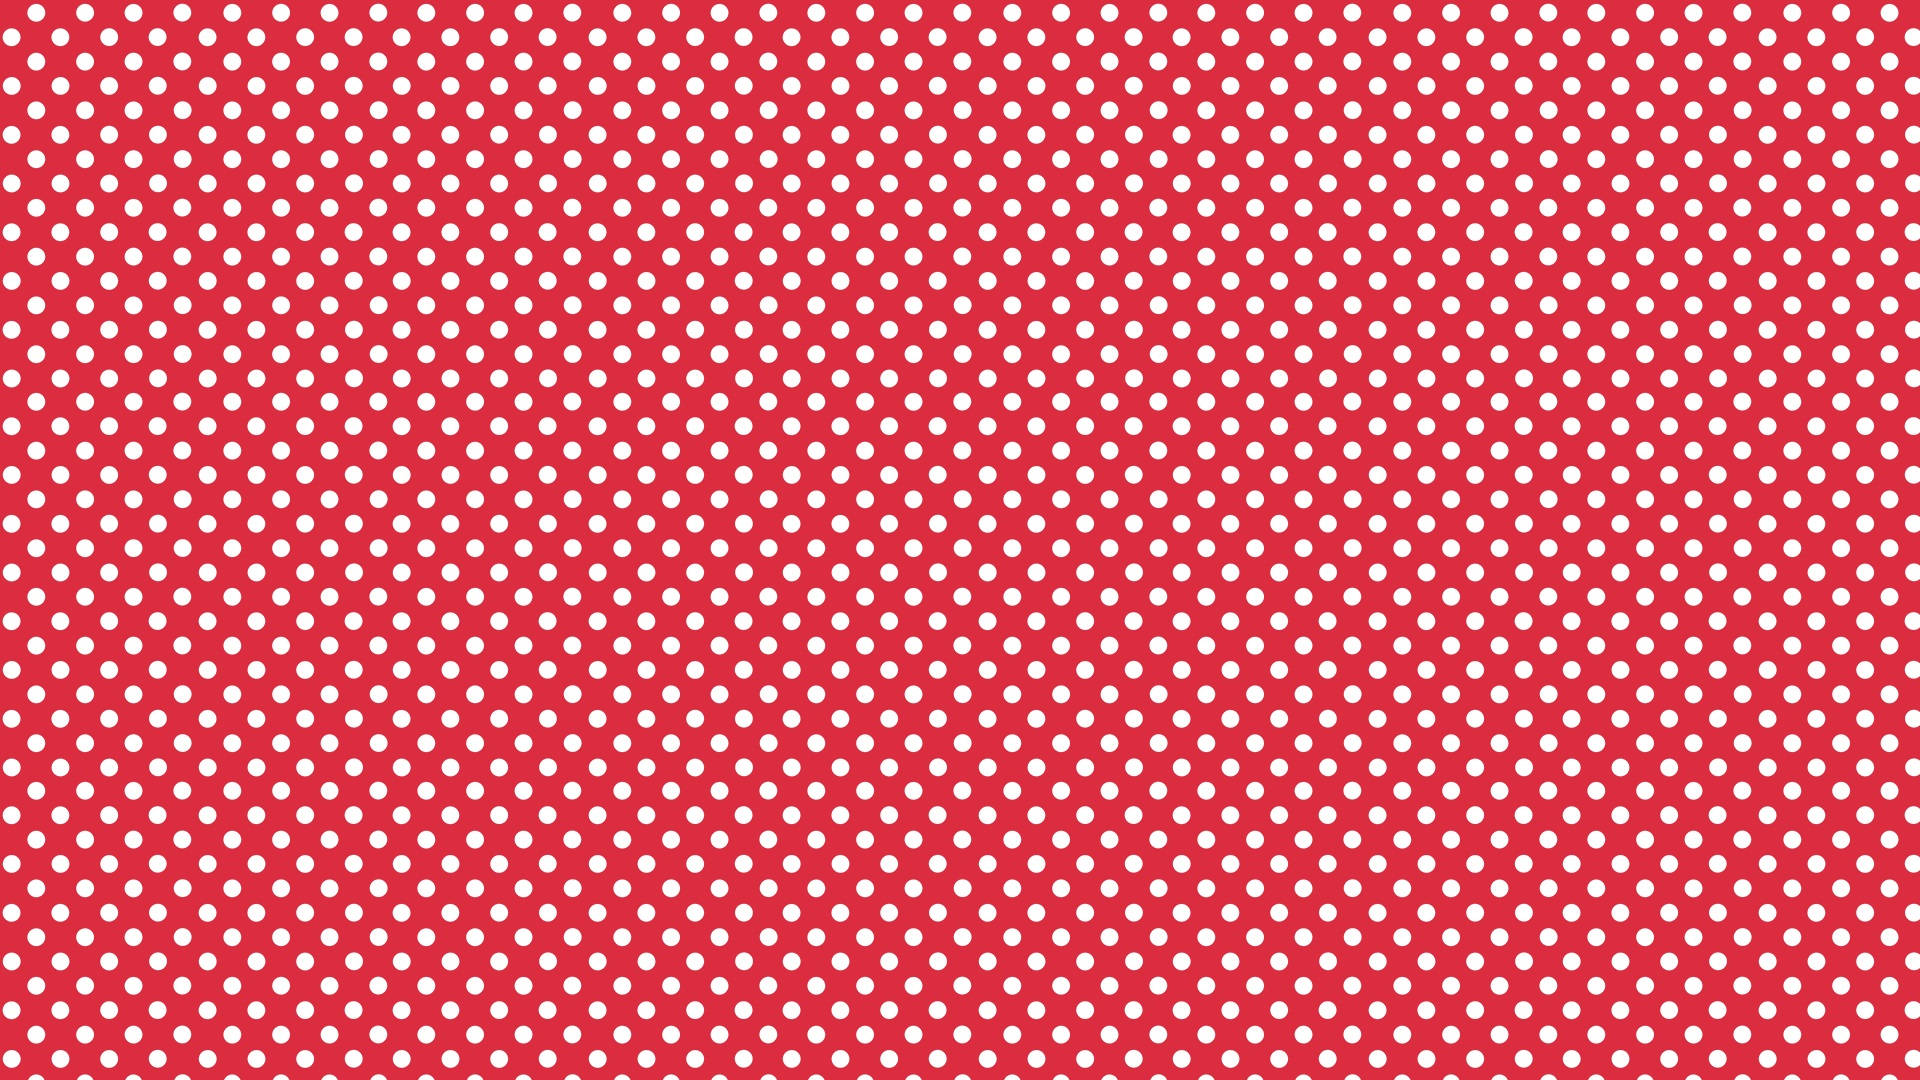 Illusion Polka Dots Background